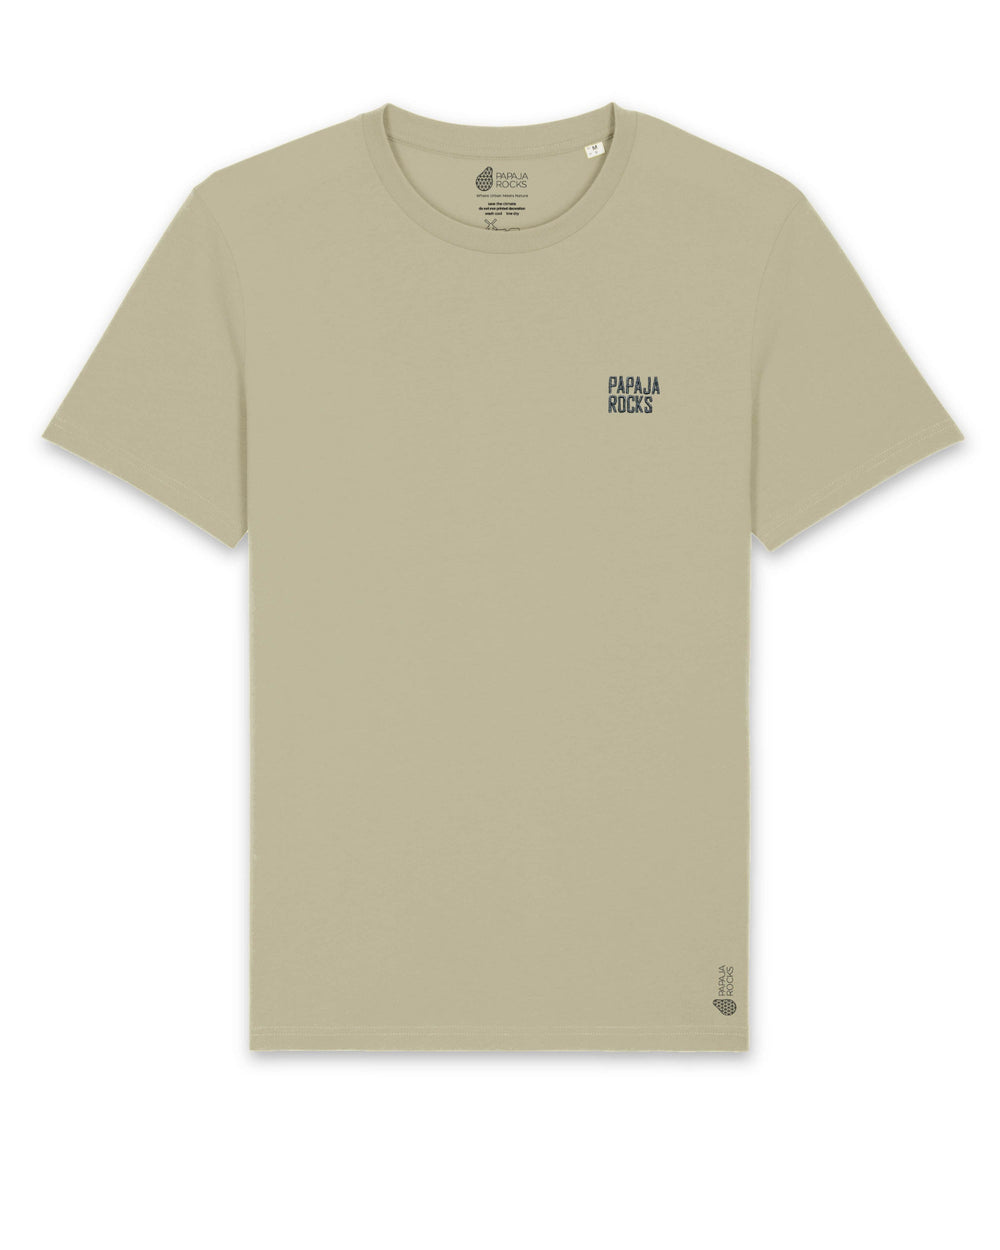 PapajaRocks Sage Shirt Tekst Logo Biologisch Katoen